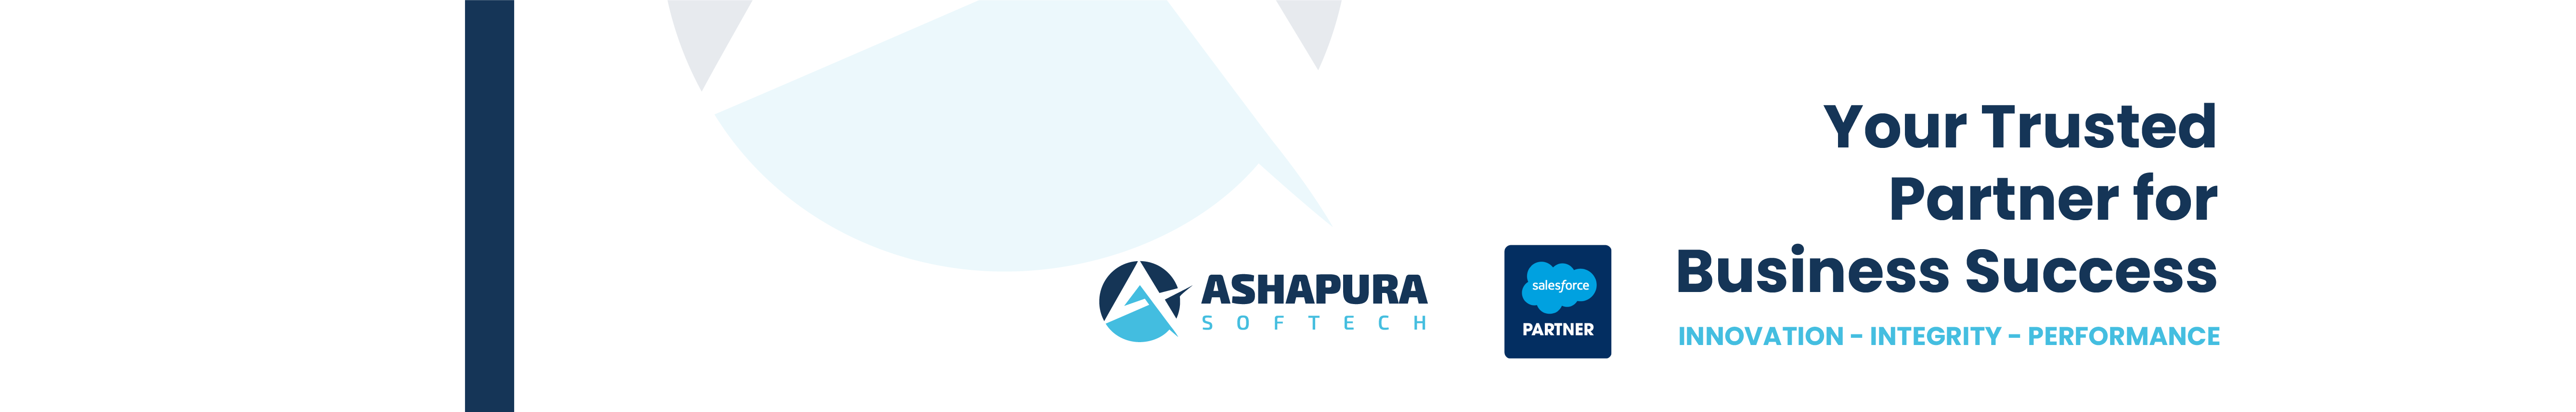 Ashapura Softech INC's profile banner